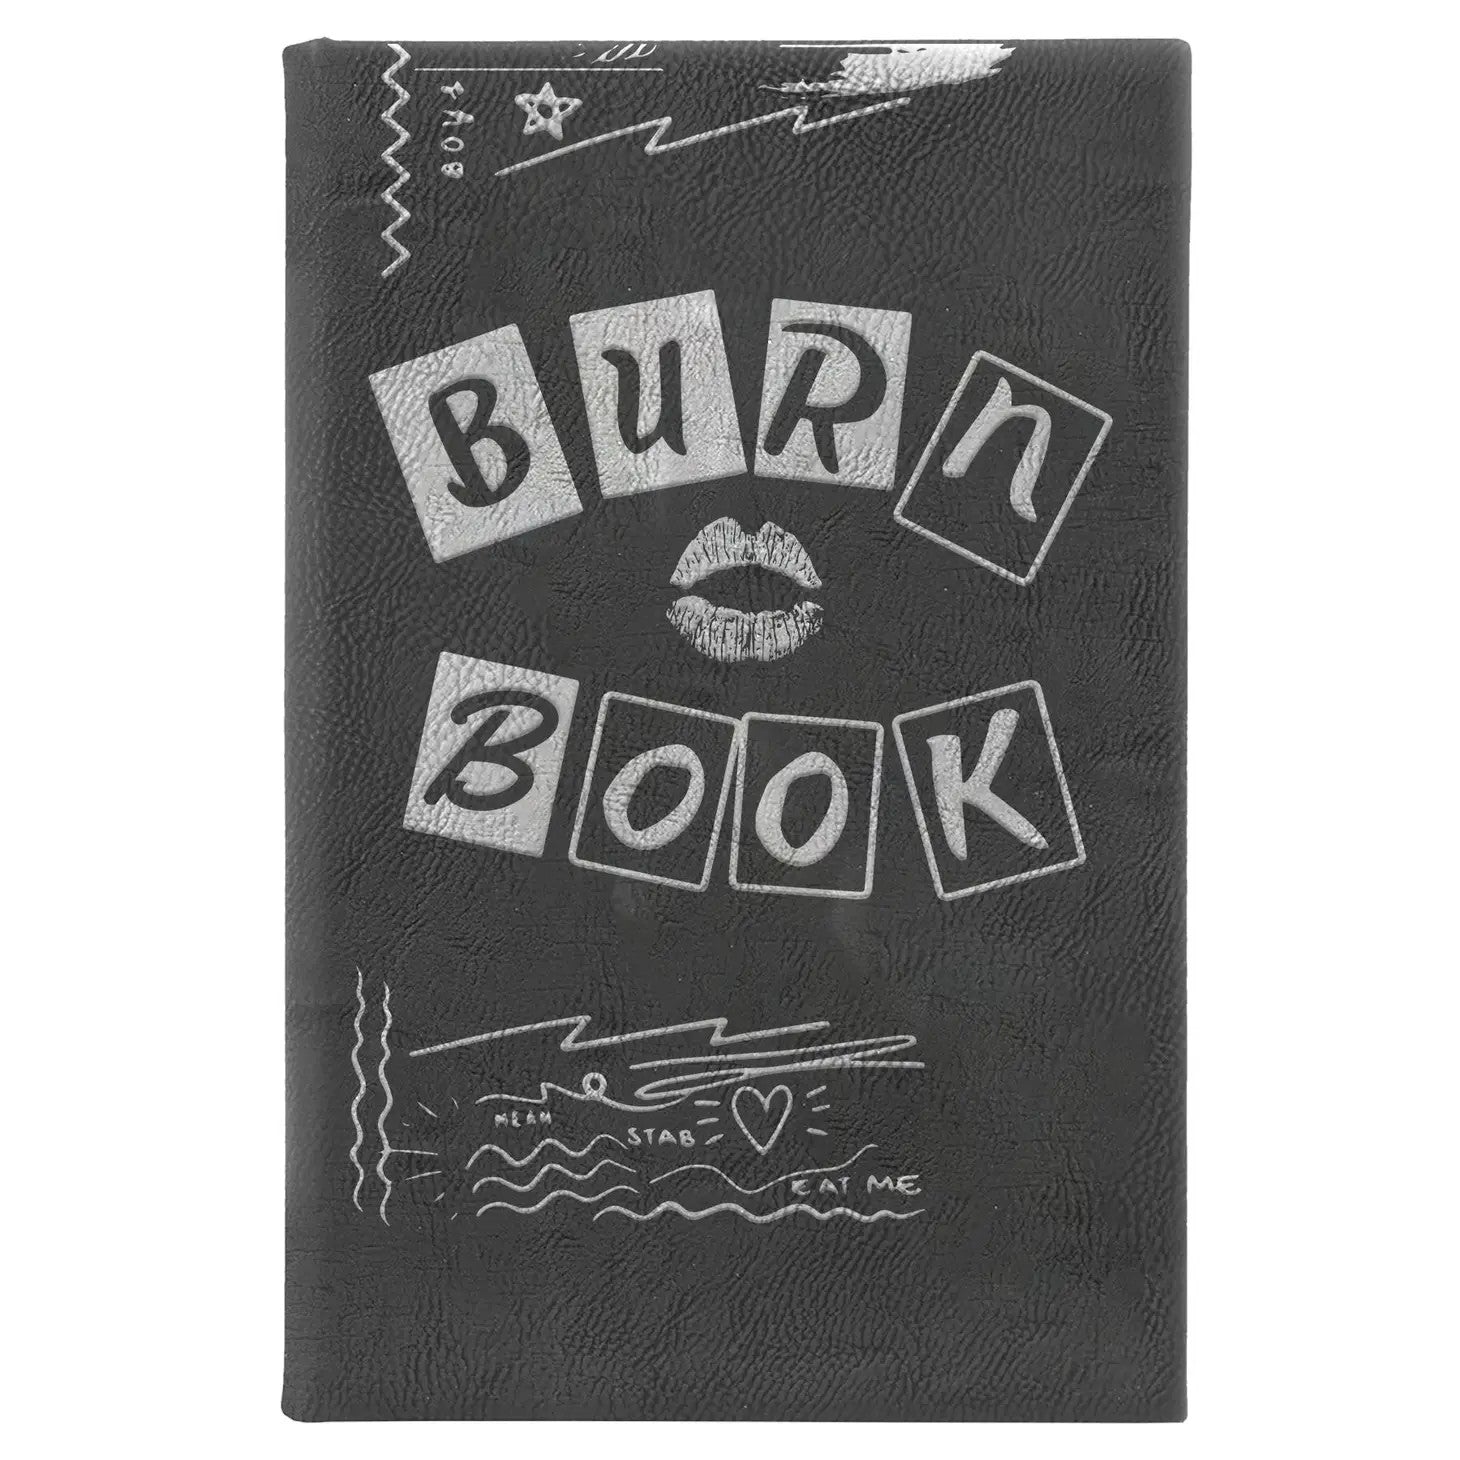 Burn Book Leather Journal - Darkside Records